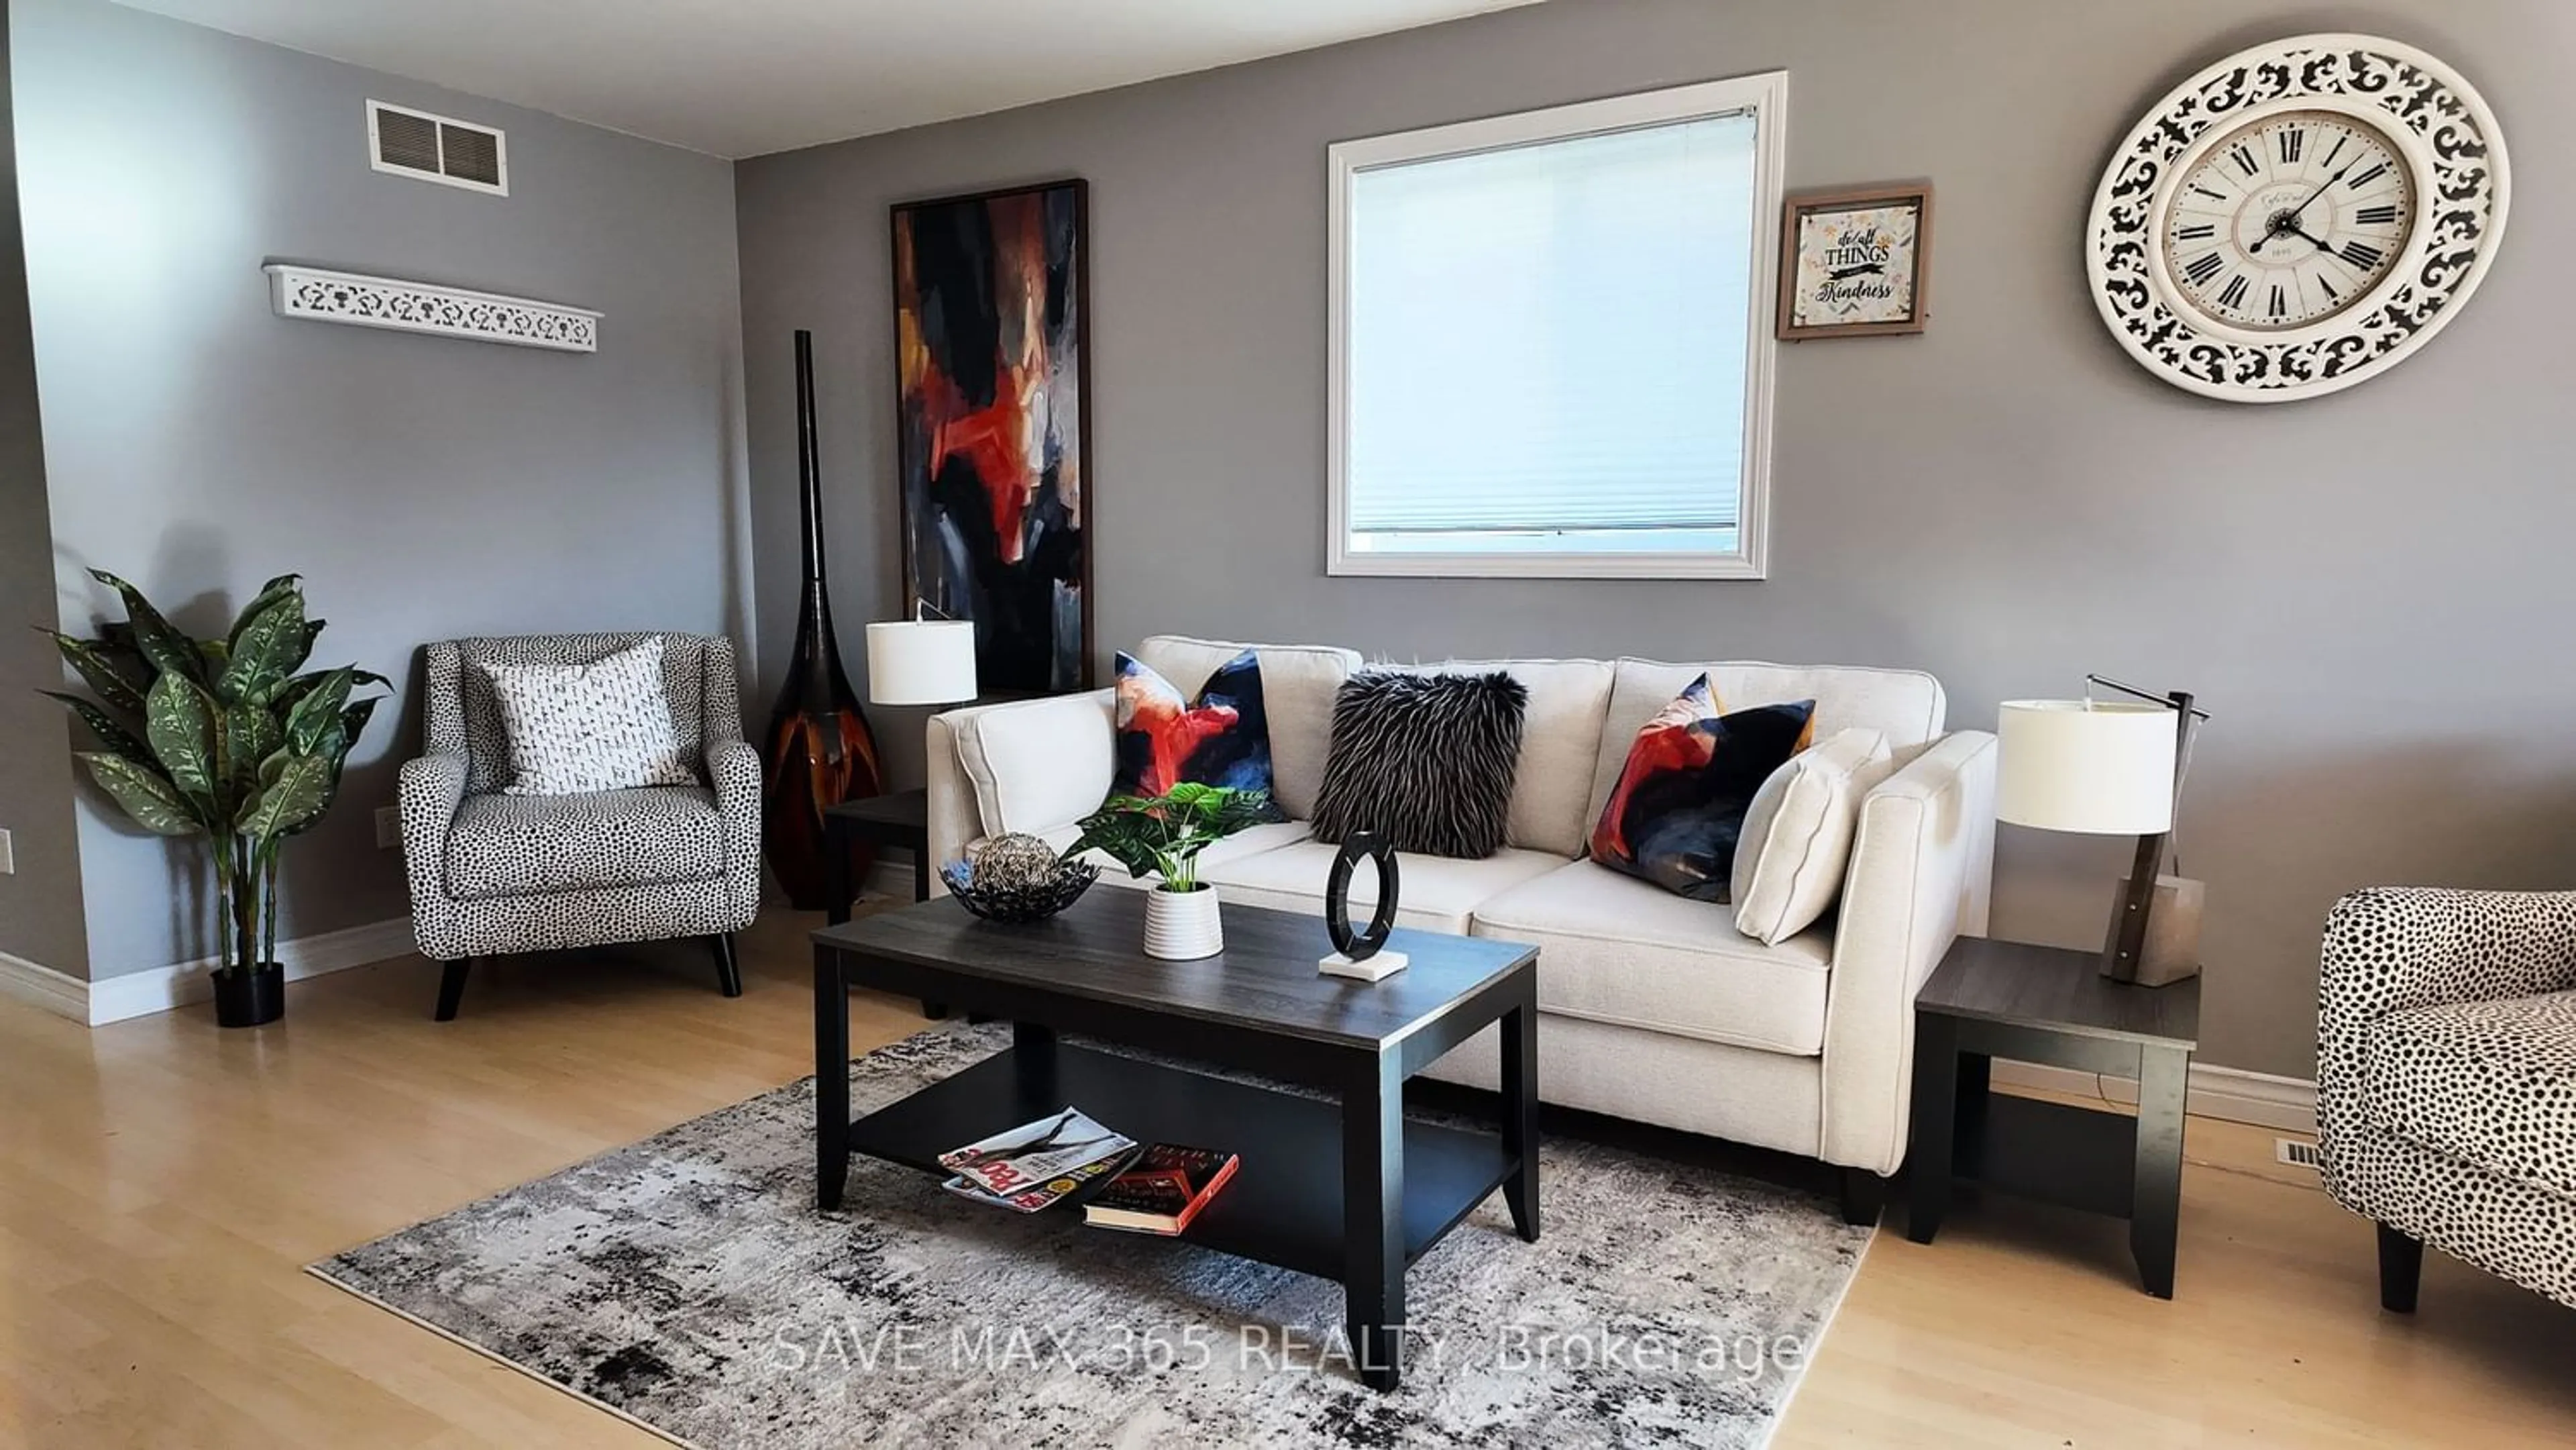 Living room for 11428 Timber Bay Cres, Windsor Ontario N8R 2K9